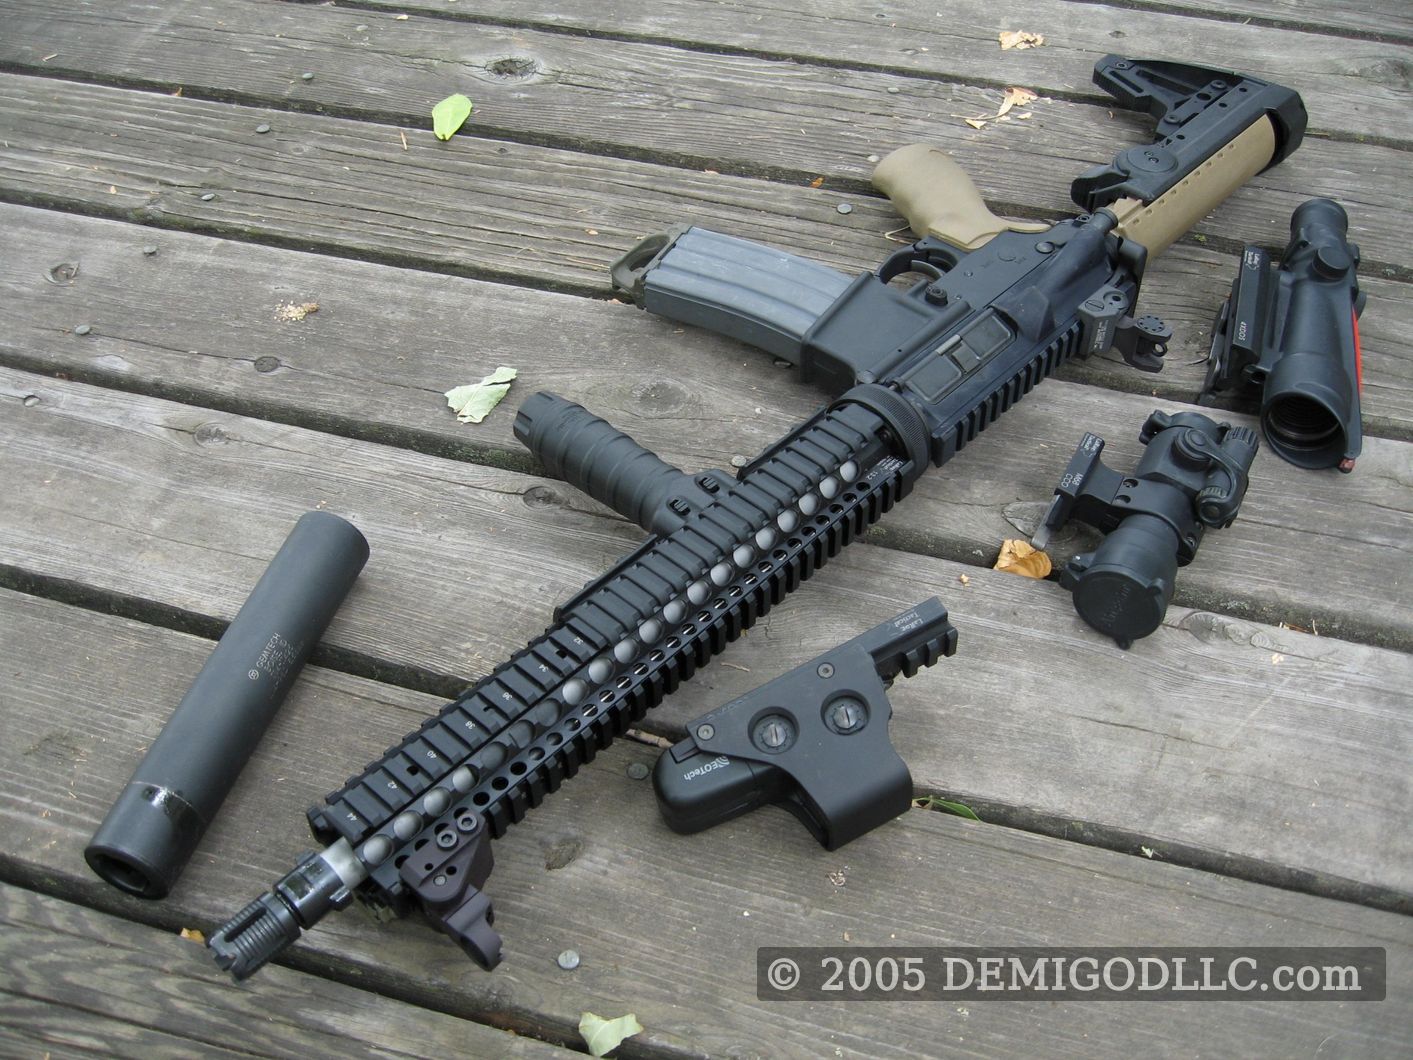 Super-RECCE/M4-SD lightweight suppressed AR15 rifle, photo.